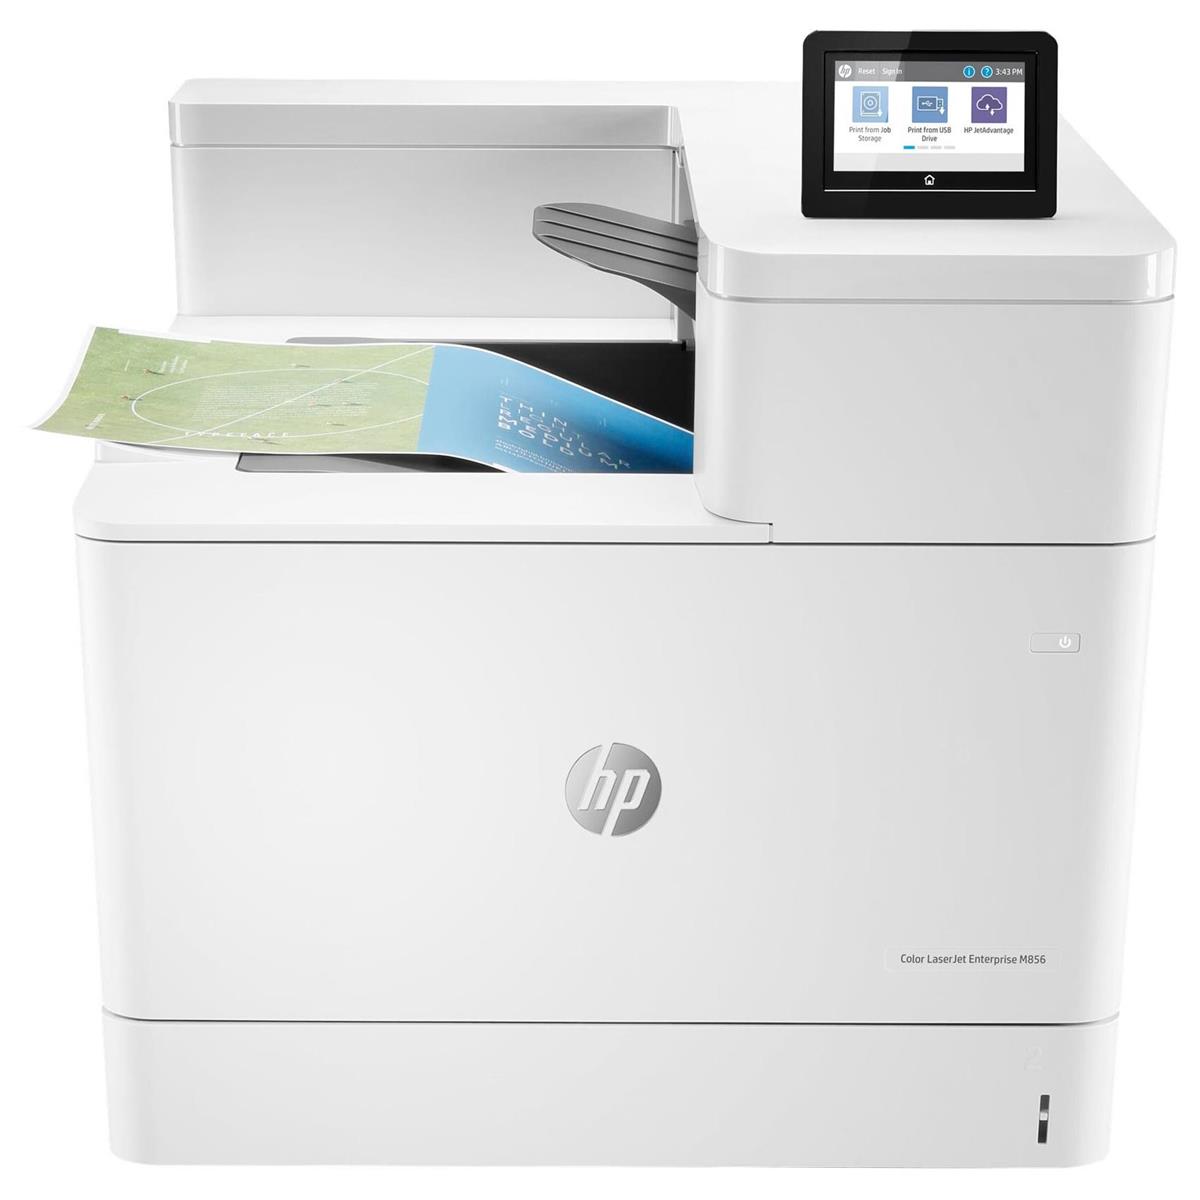 

HP M856dn Color LaserJet Enterprise Printer, 550 Sheet Standard Input Tray